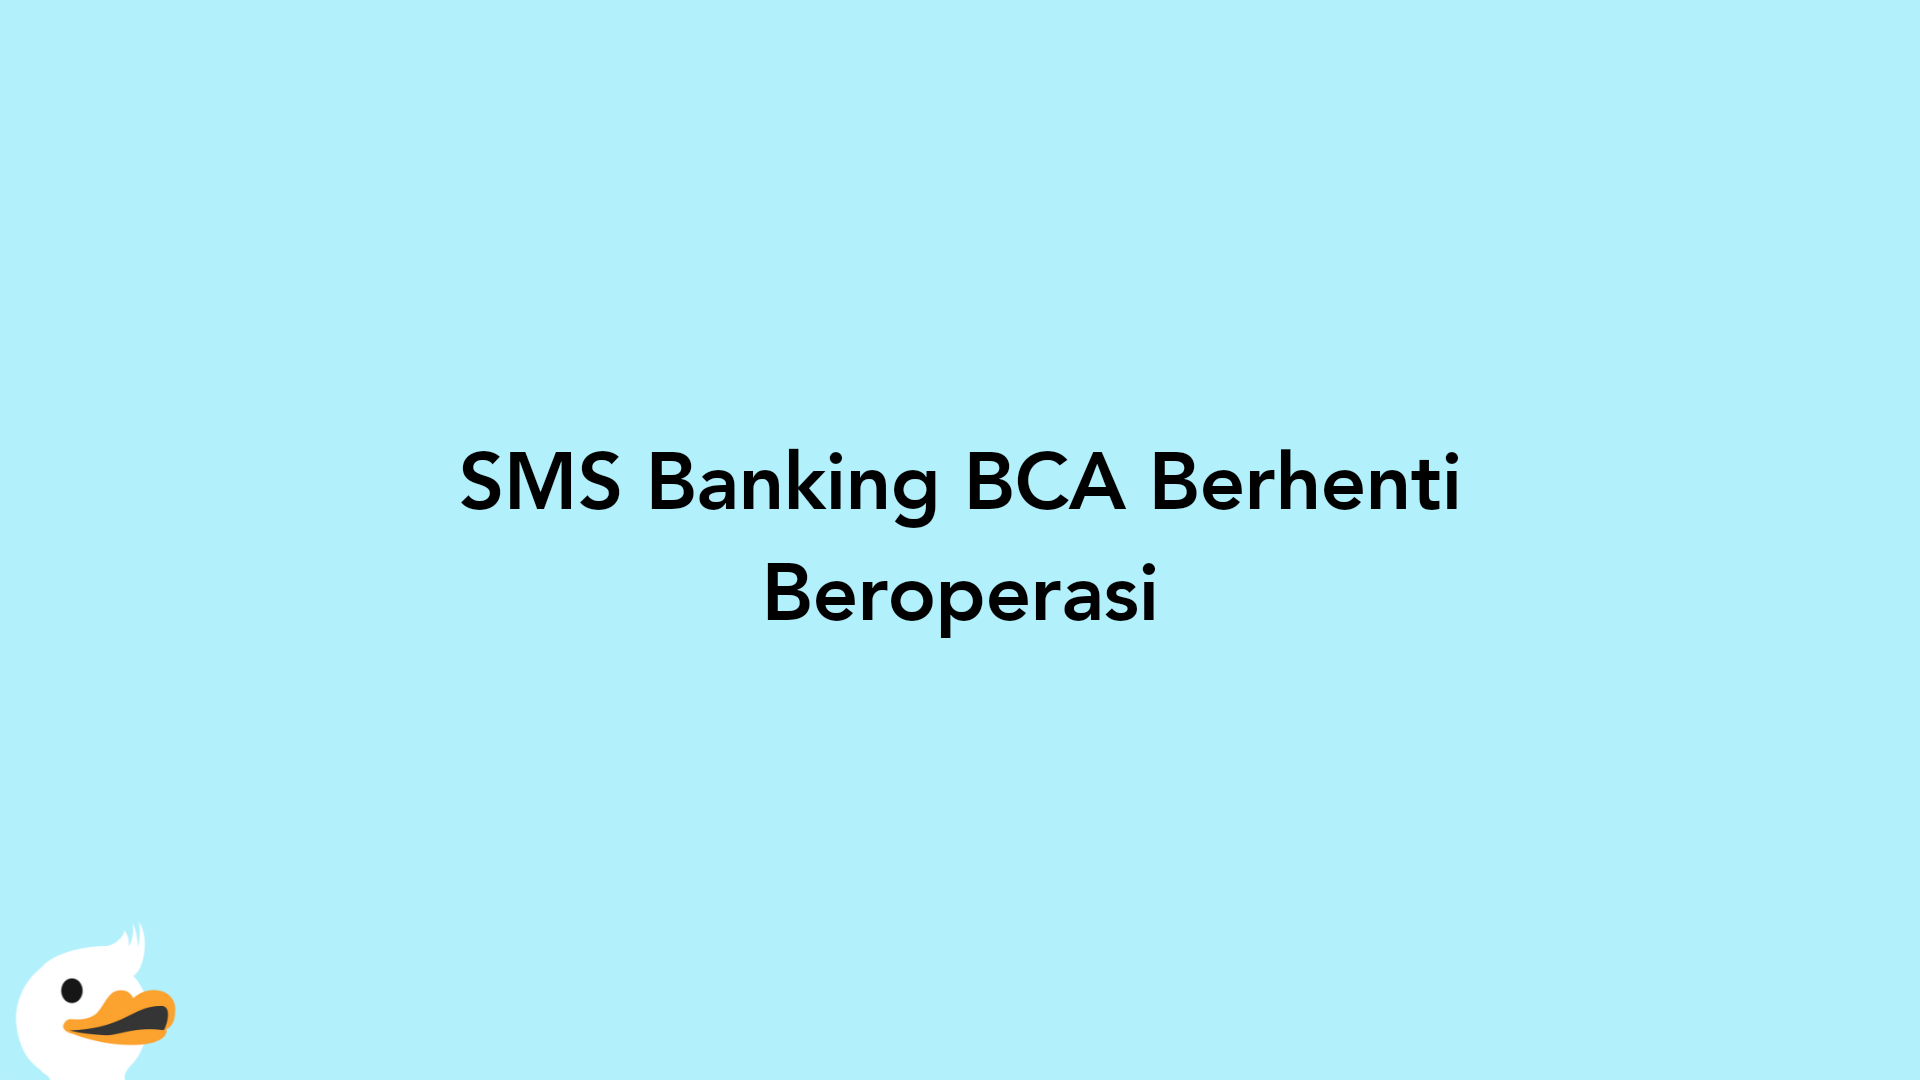 SMS Banking BCA Berhenti Beroperasi